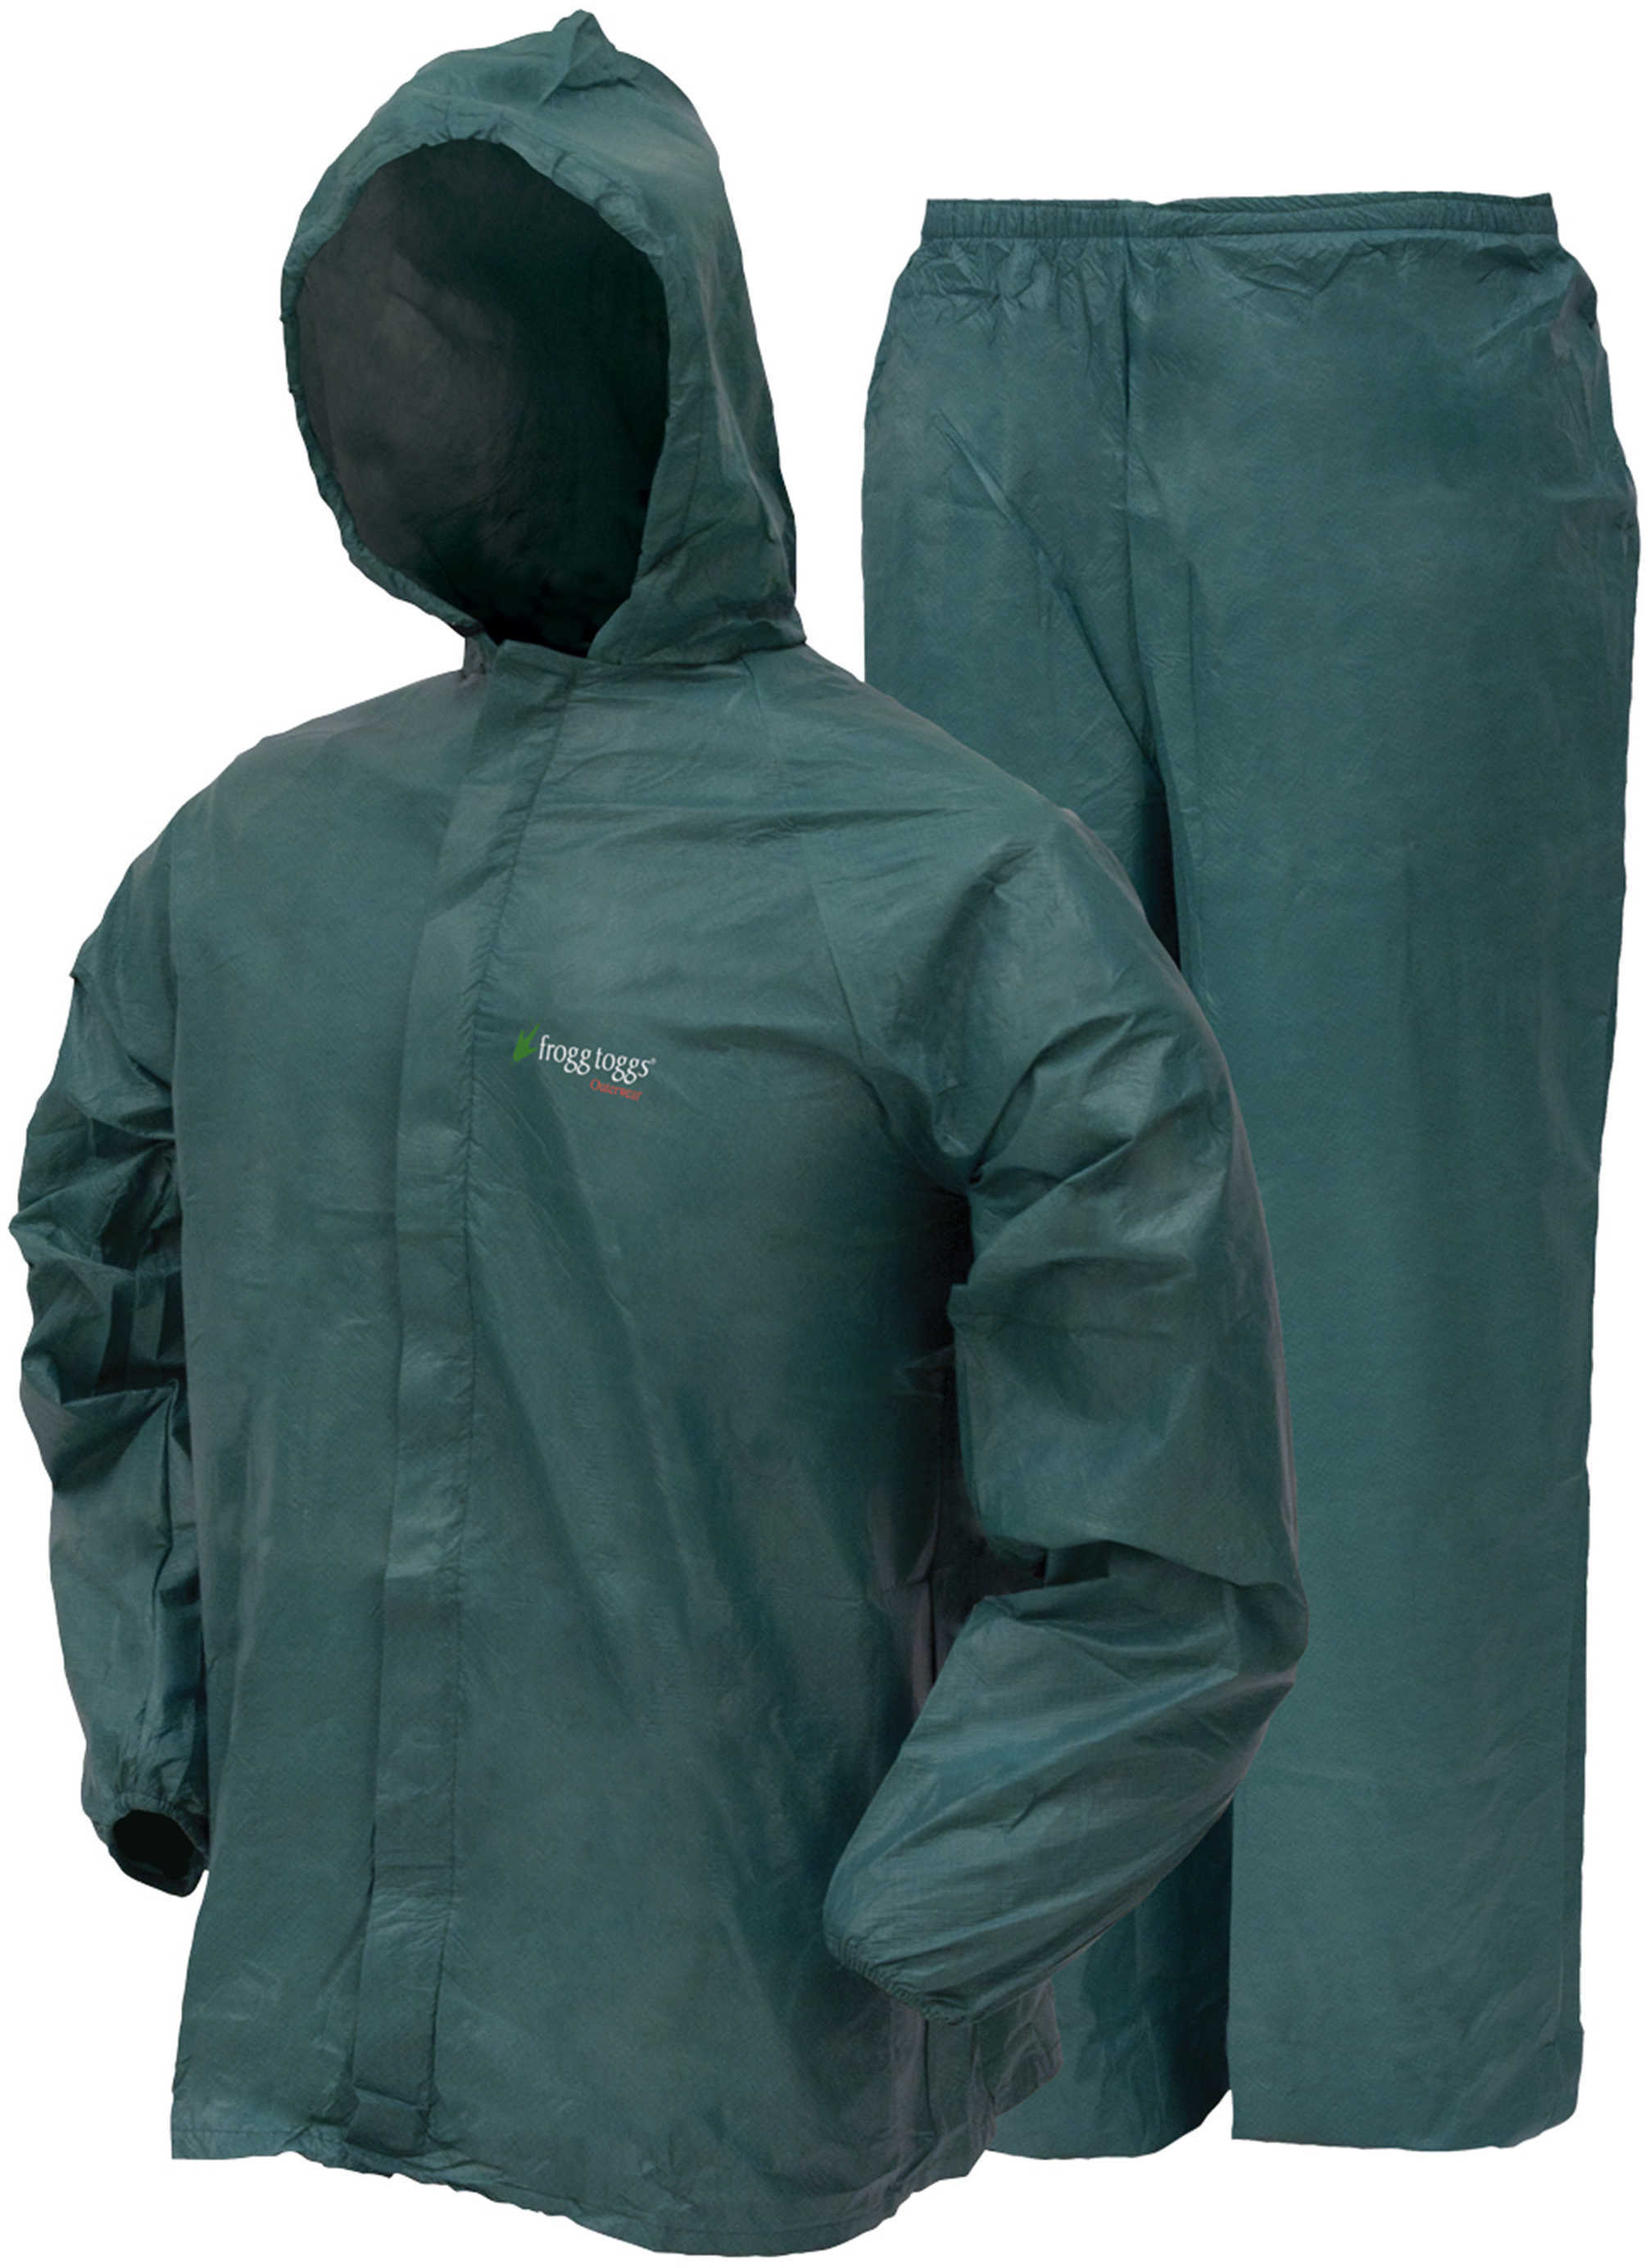 Frogg Toggs Ultra-Lite2 Rain Suit w/Stuff Sack Medium, Green UL12104-09MD